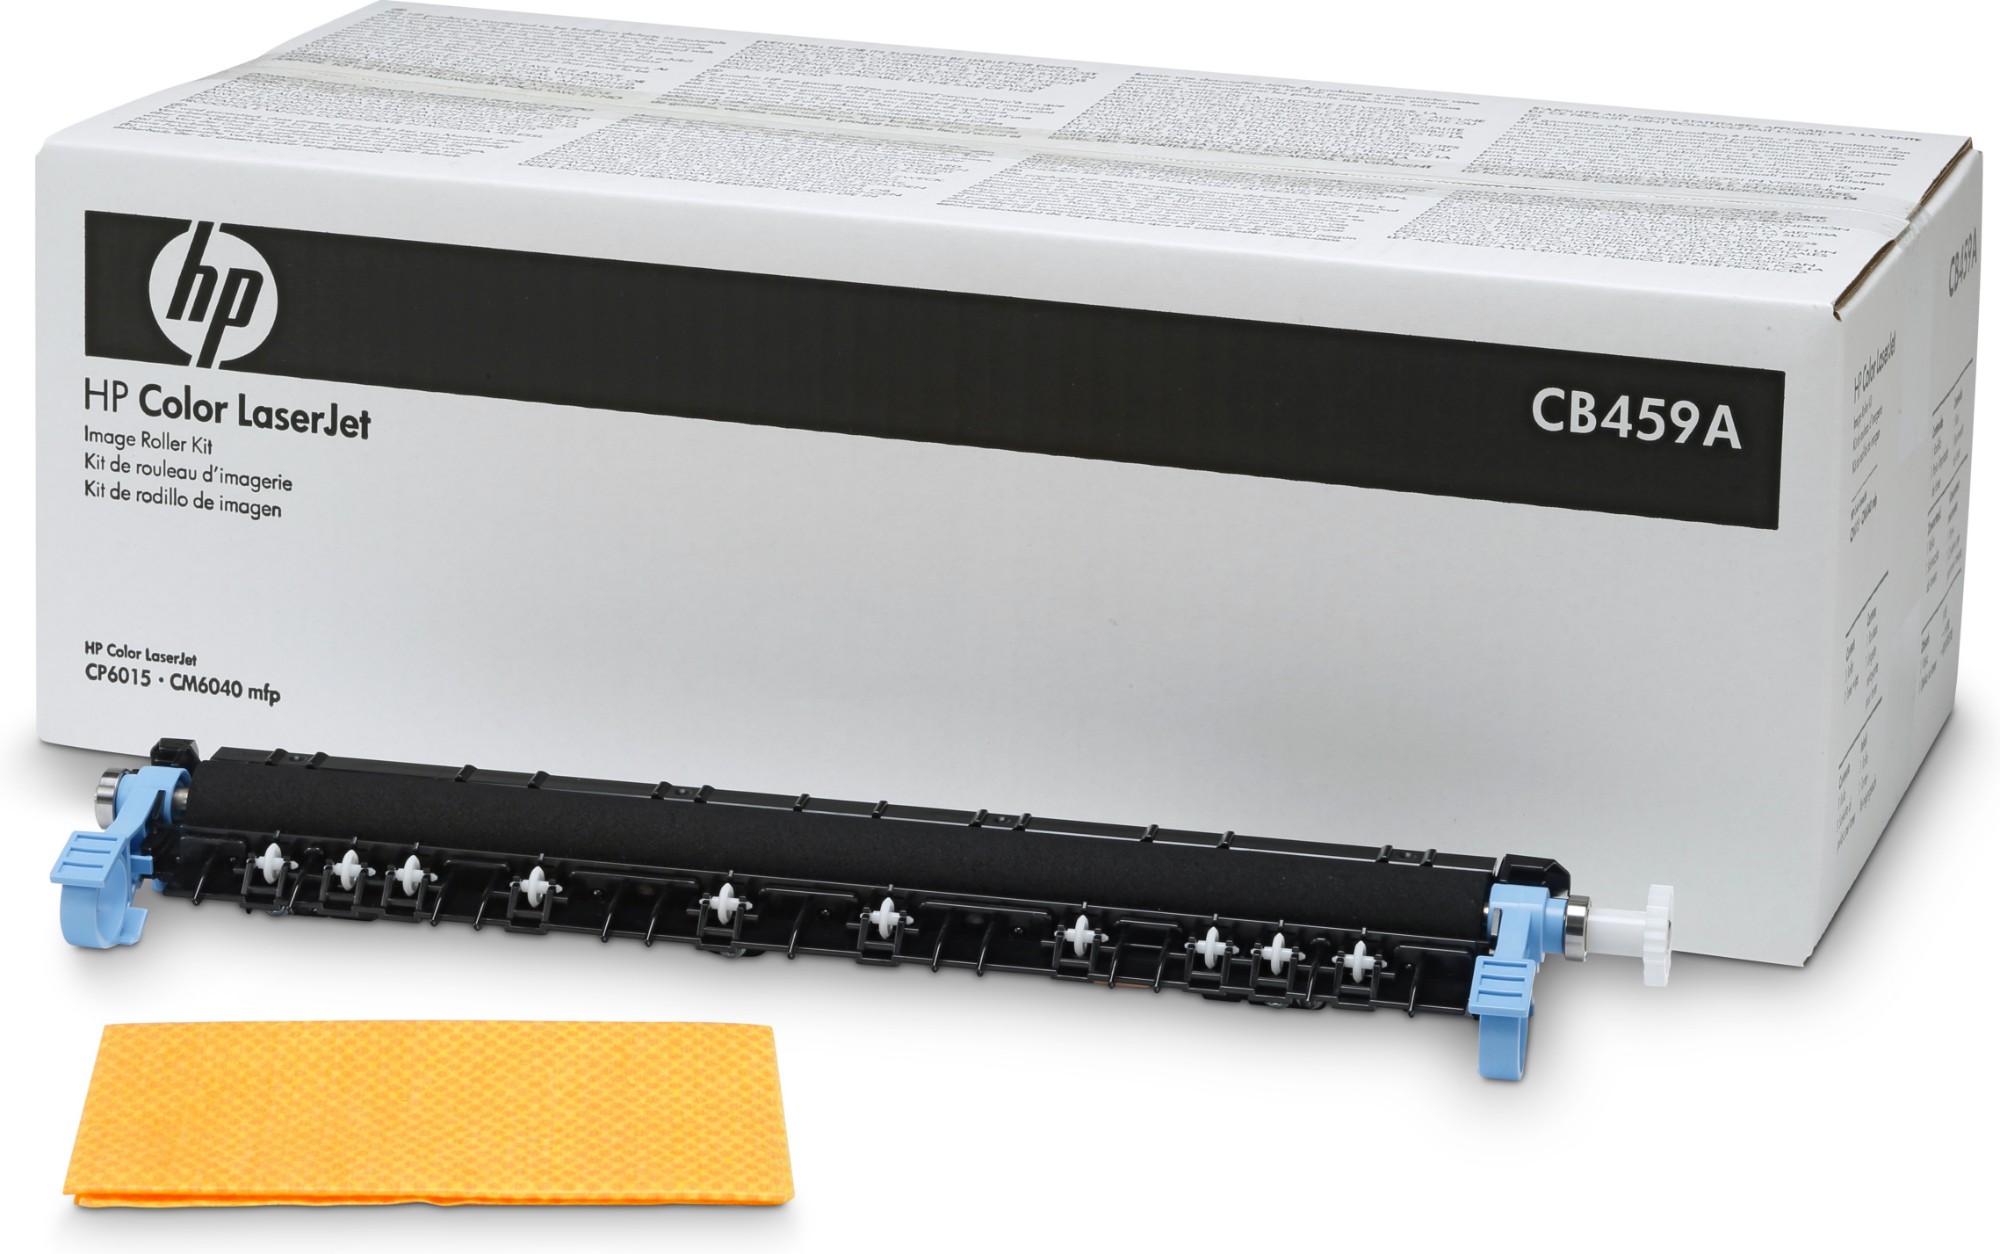 HP Color LaserJet CB459A Roller Kit 150000 páginas